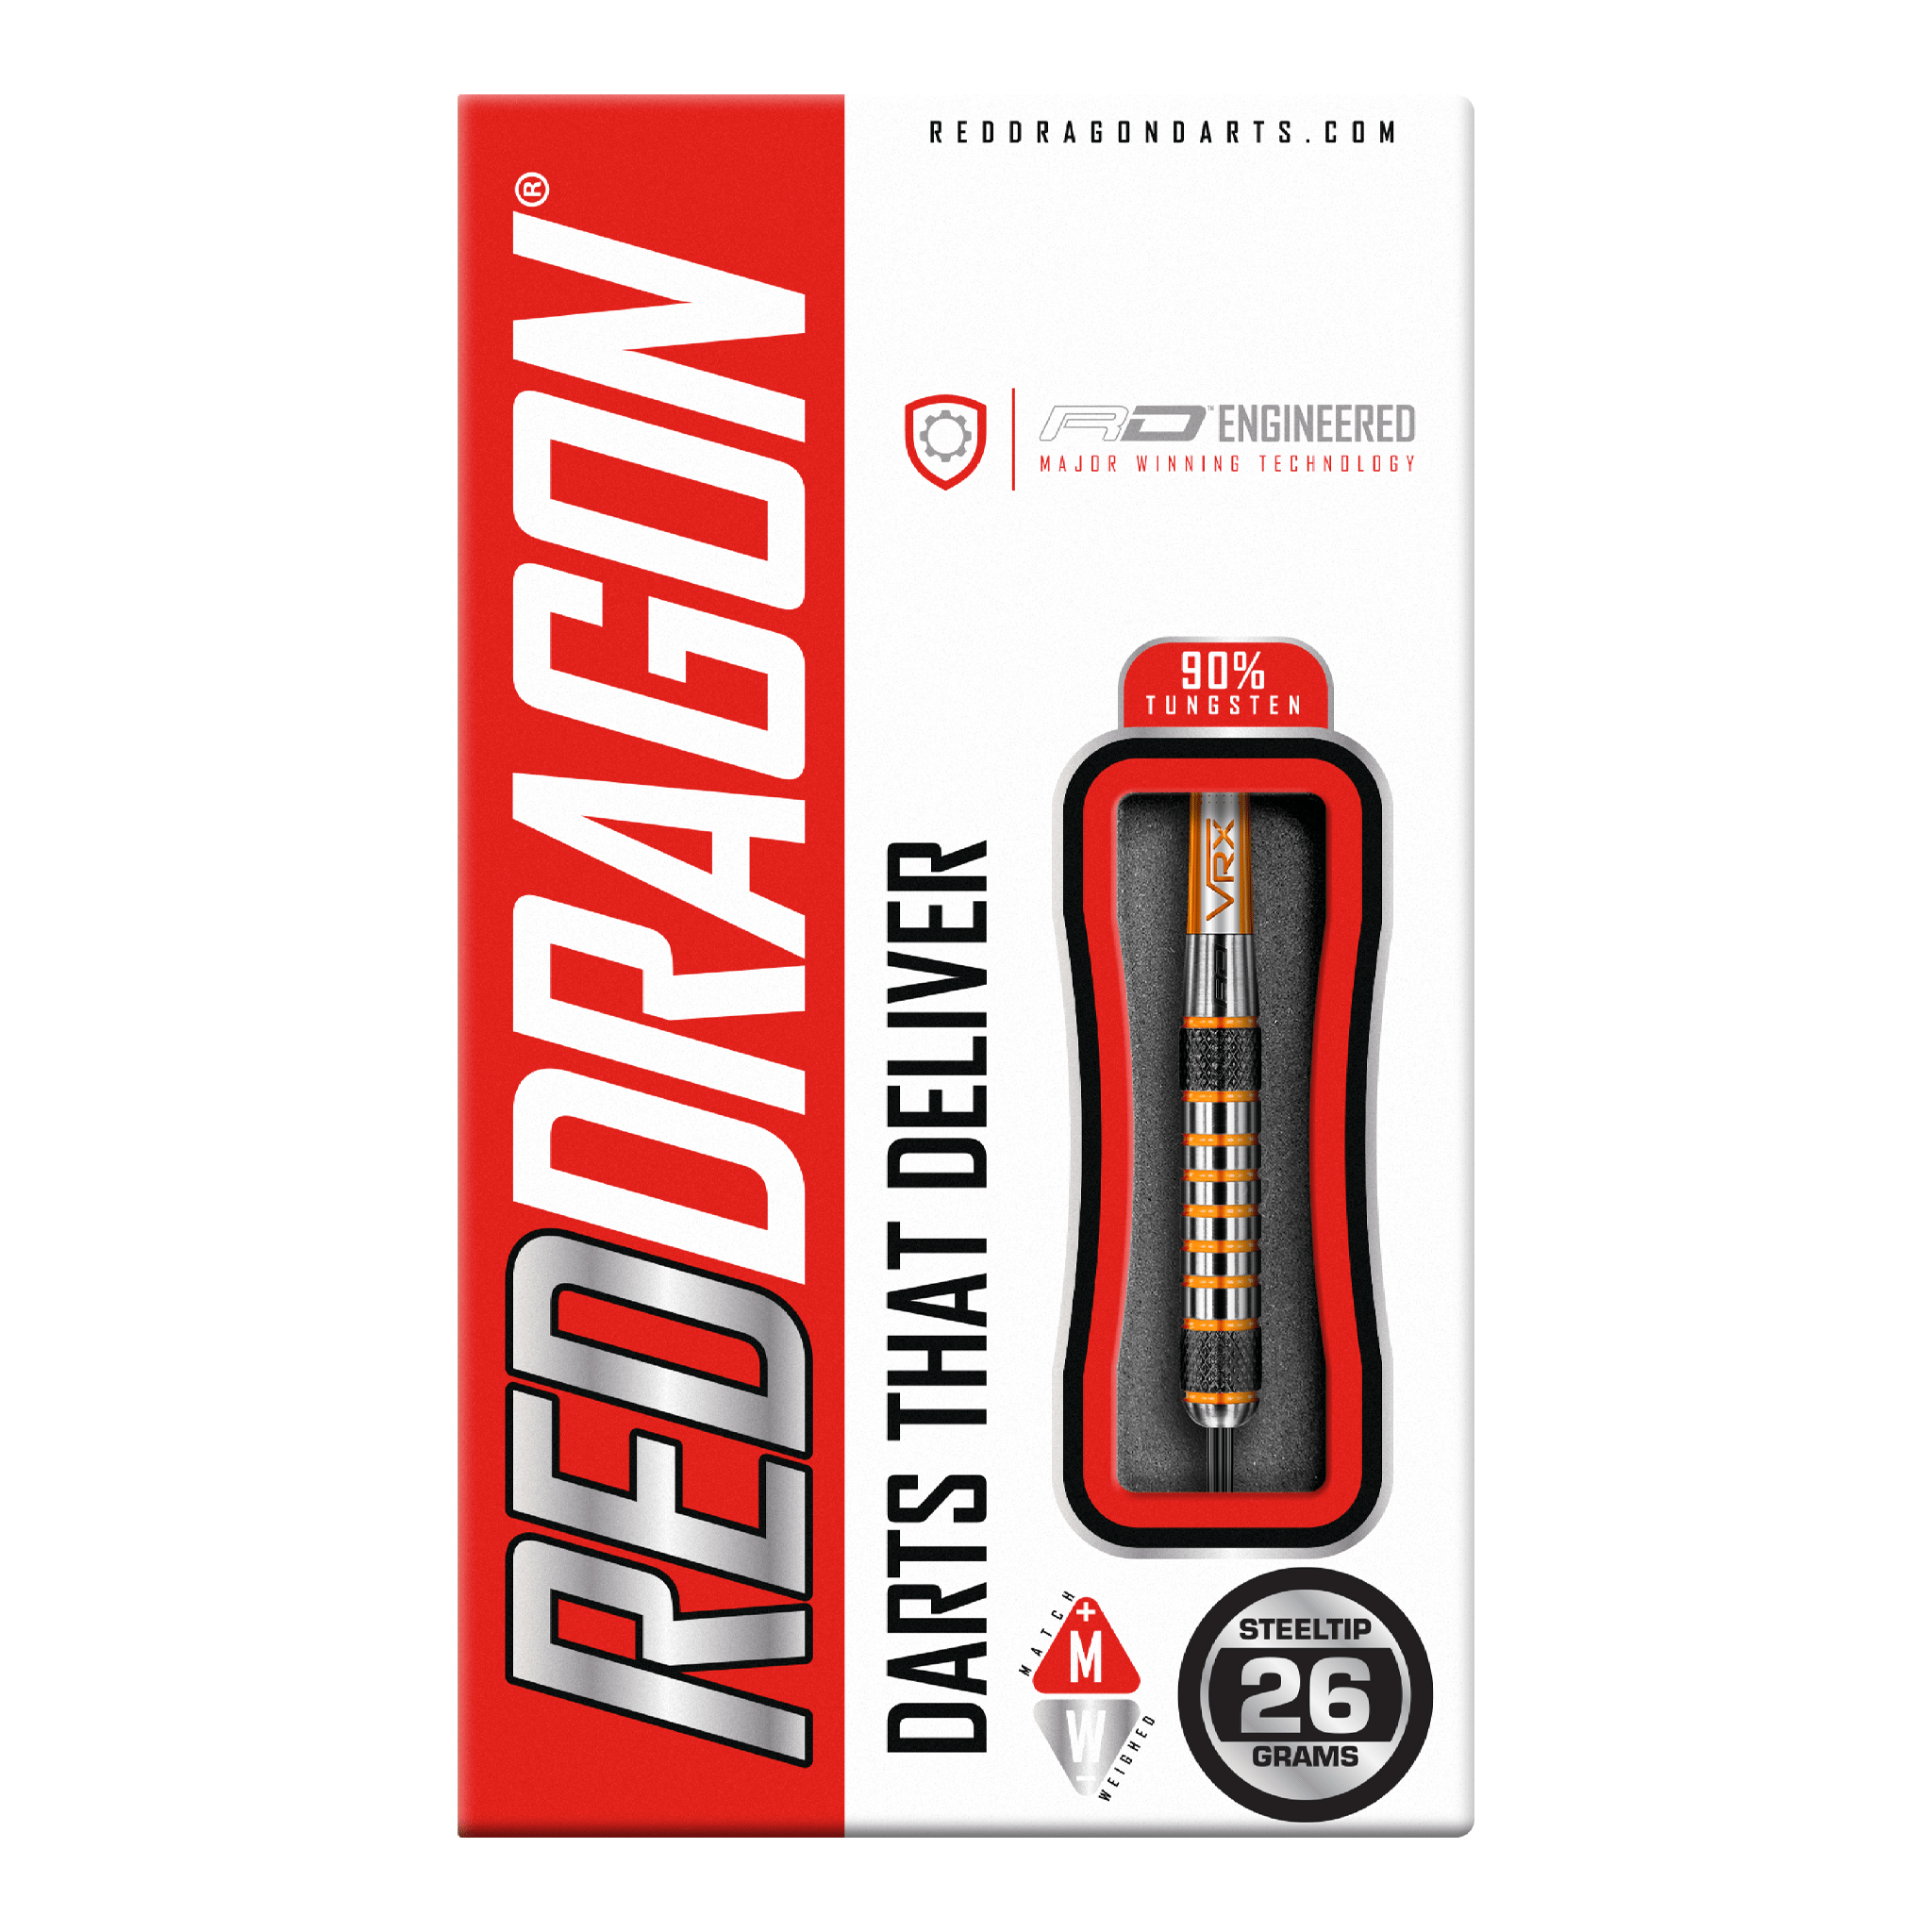 Red Dragon Amberjack 7 - 90% Tungsten Steel Tip Darts 26 Grams Darts